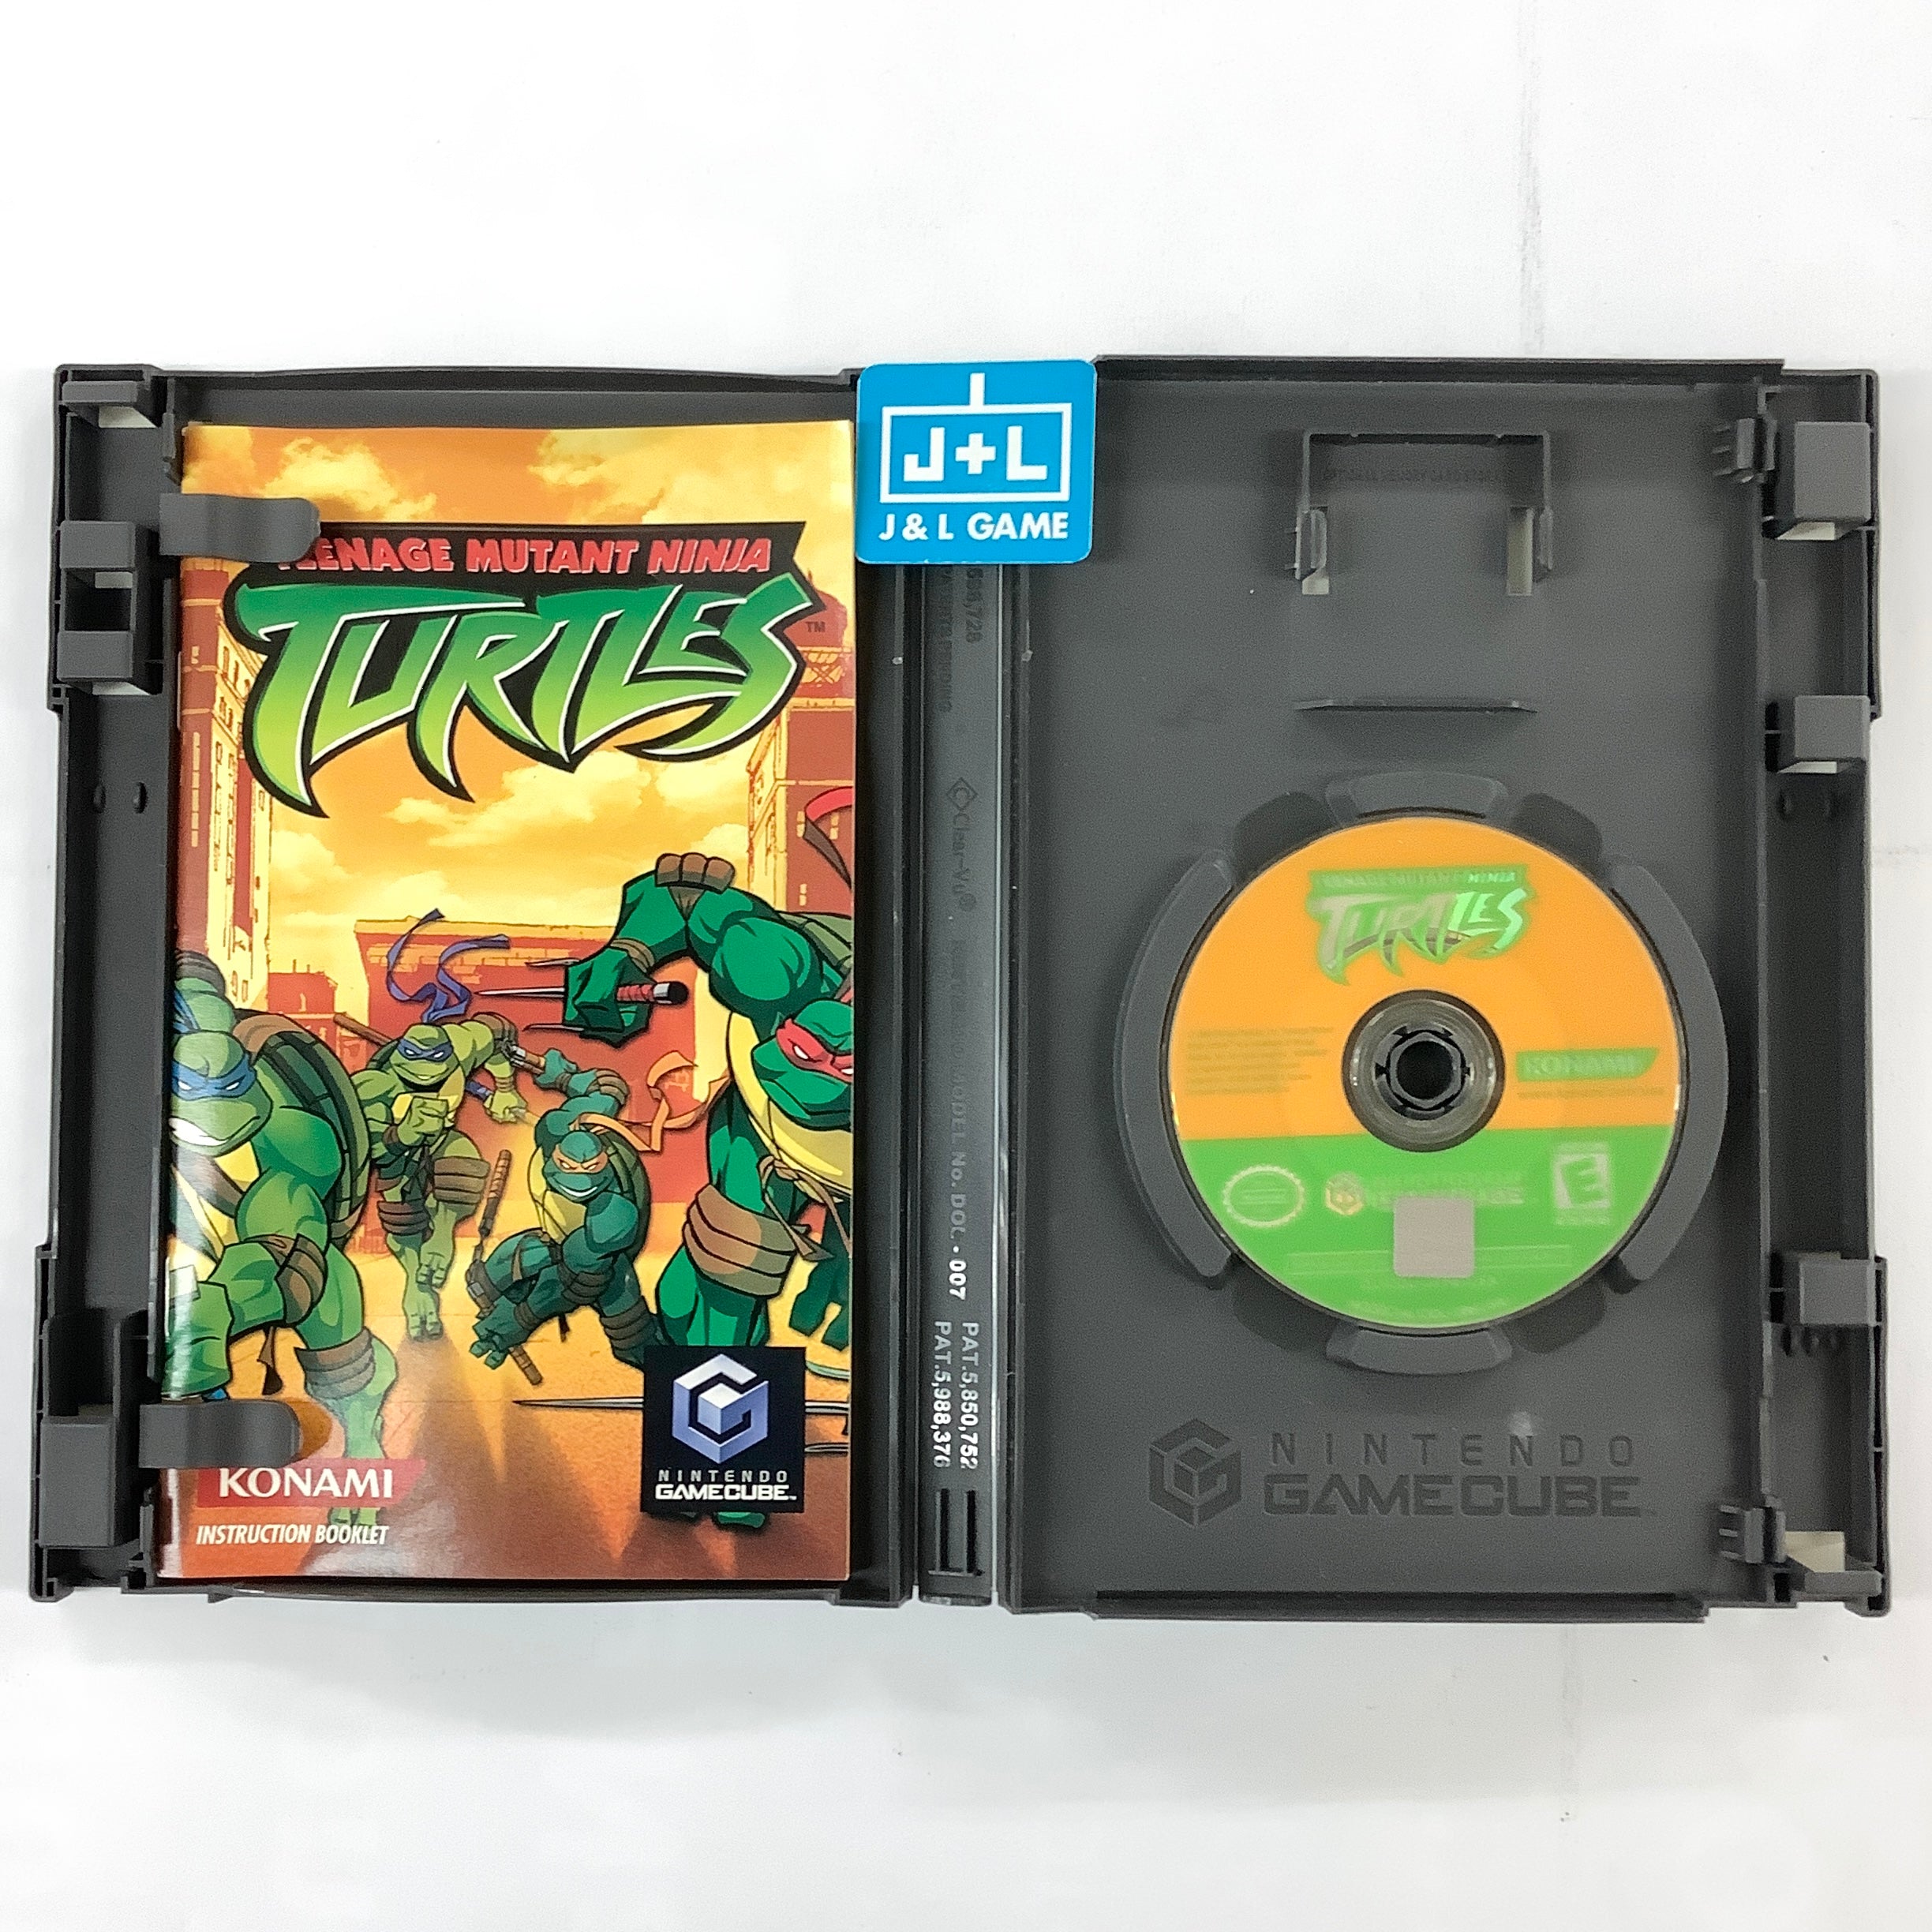 Teenage Mutant Ninja Turtles - (GC) GameCube [Pre-Owned] Video Games Konami   